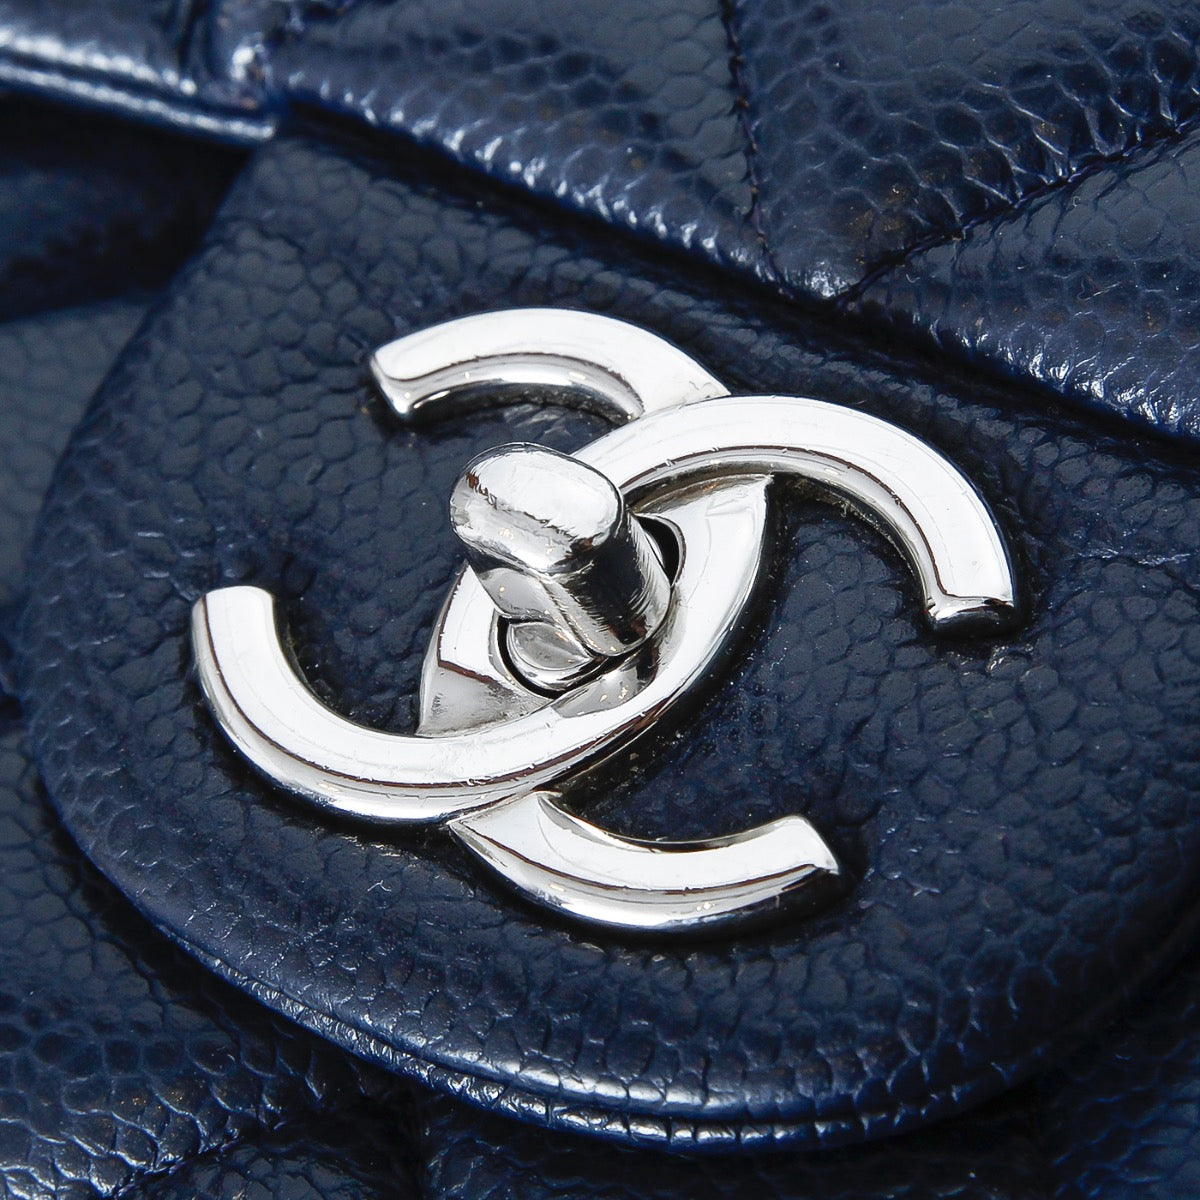 Chanel Dark Blue Maxi Double Flap